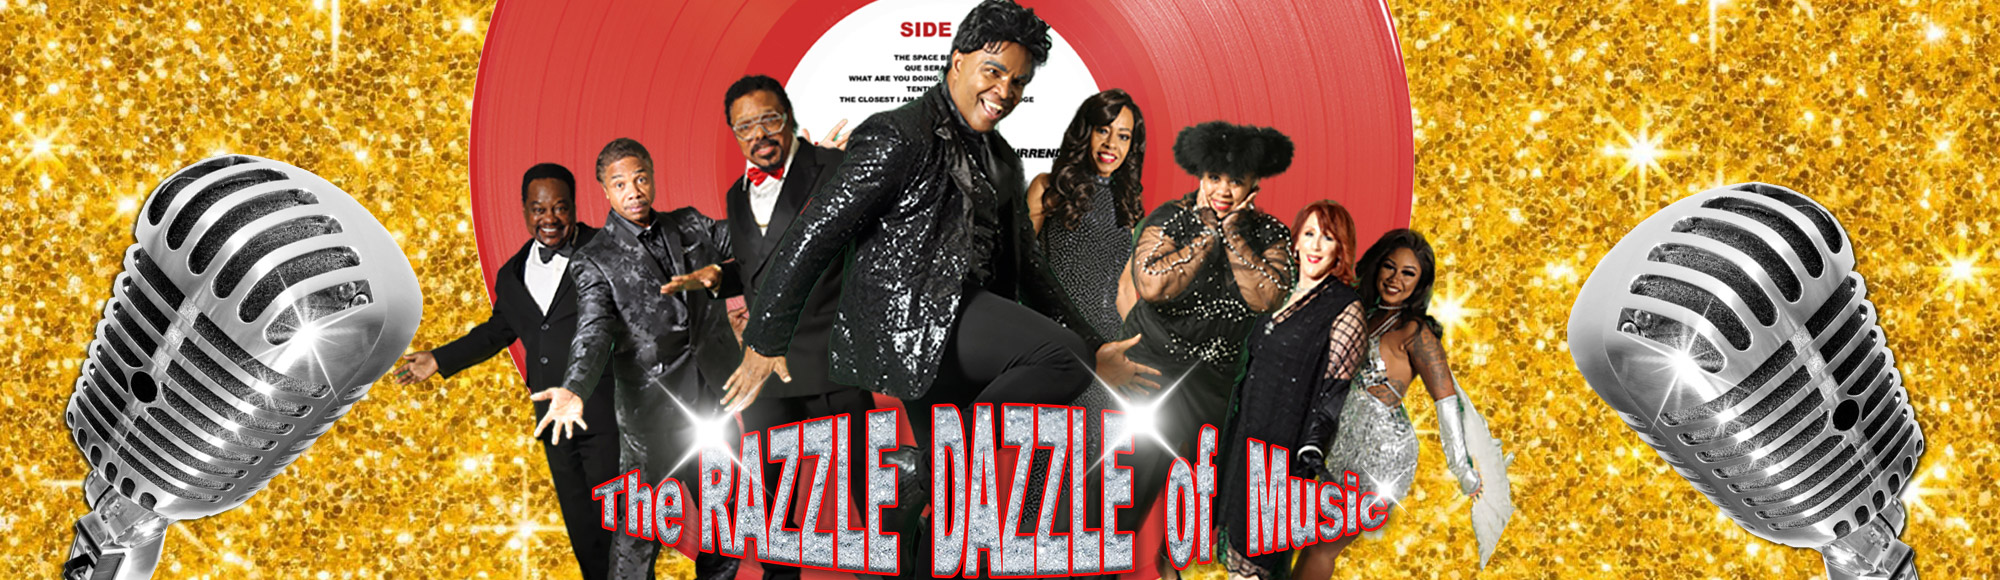 Razzle Dazzle show